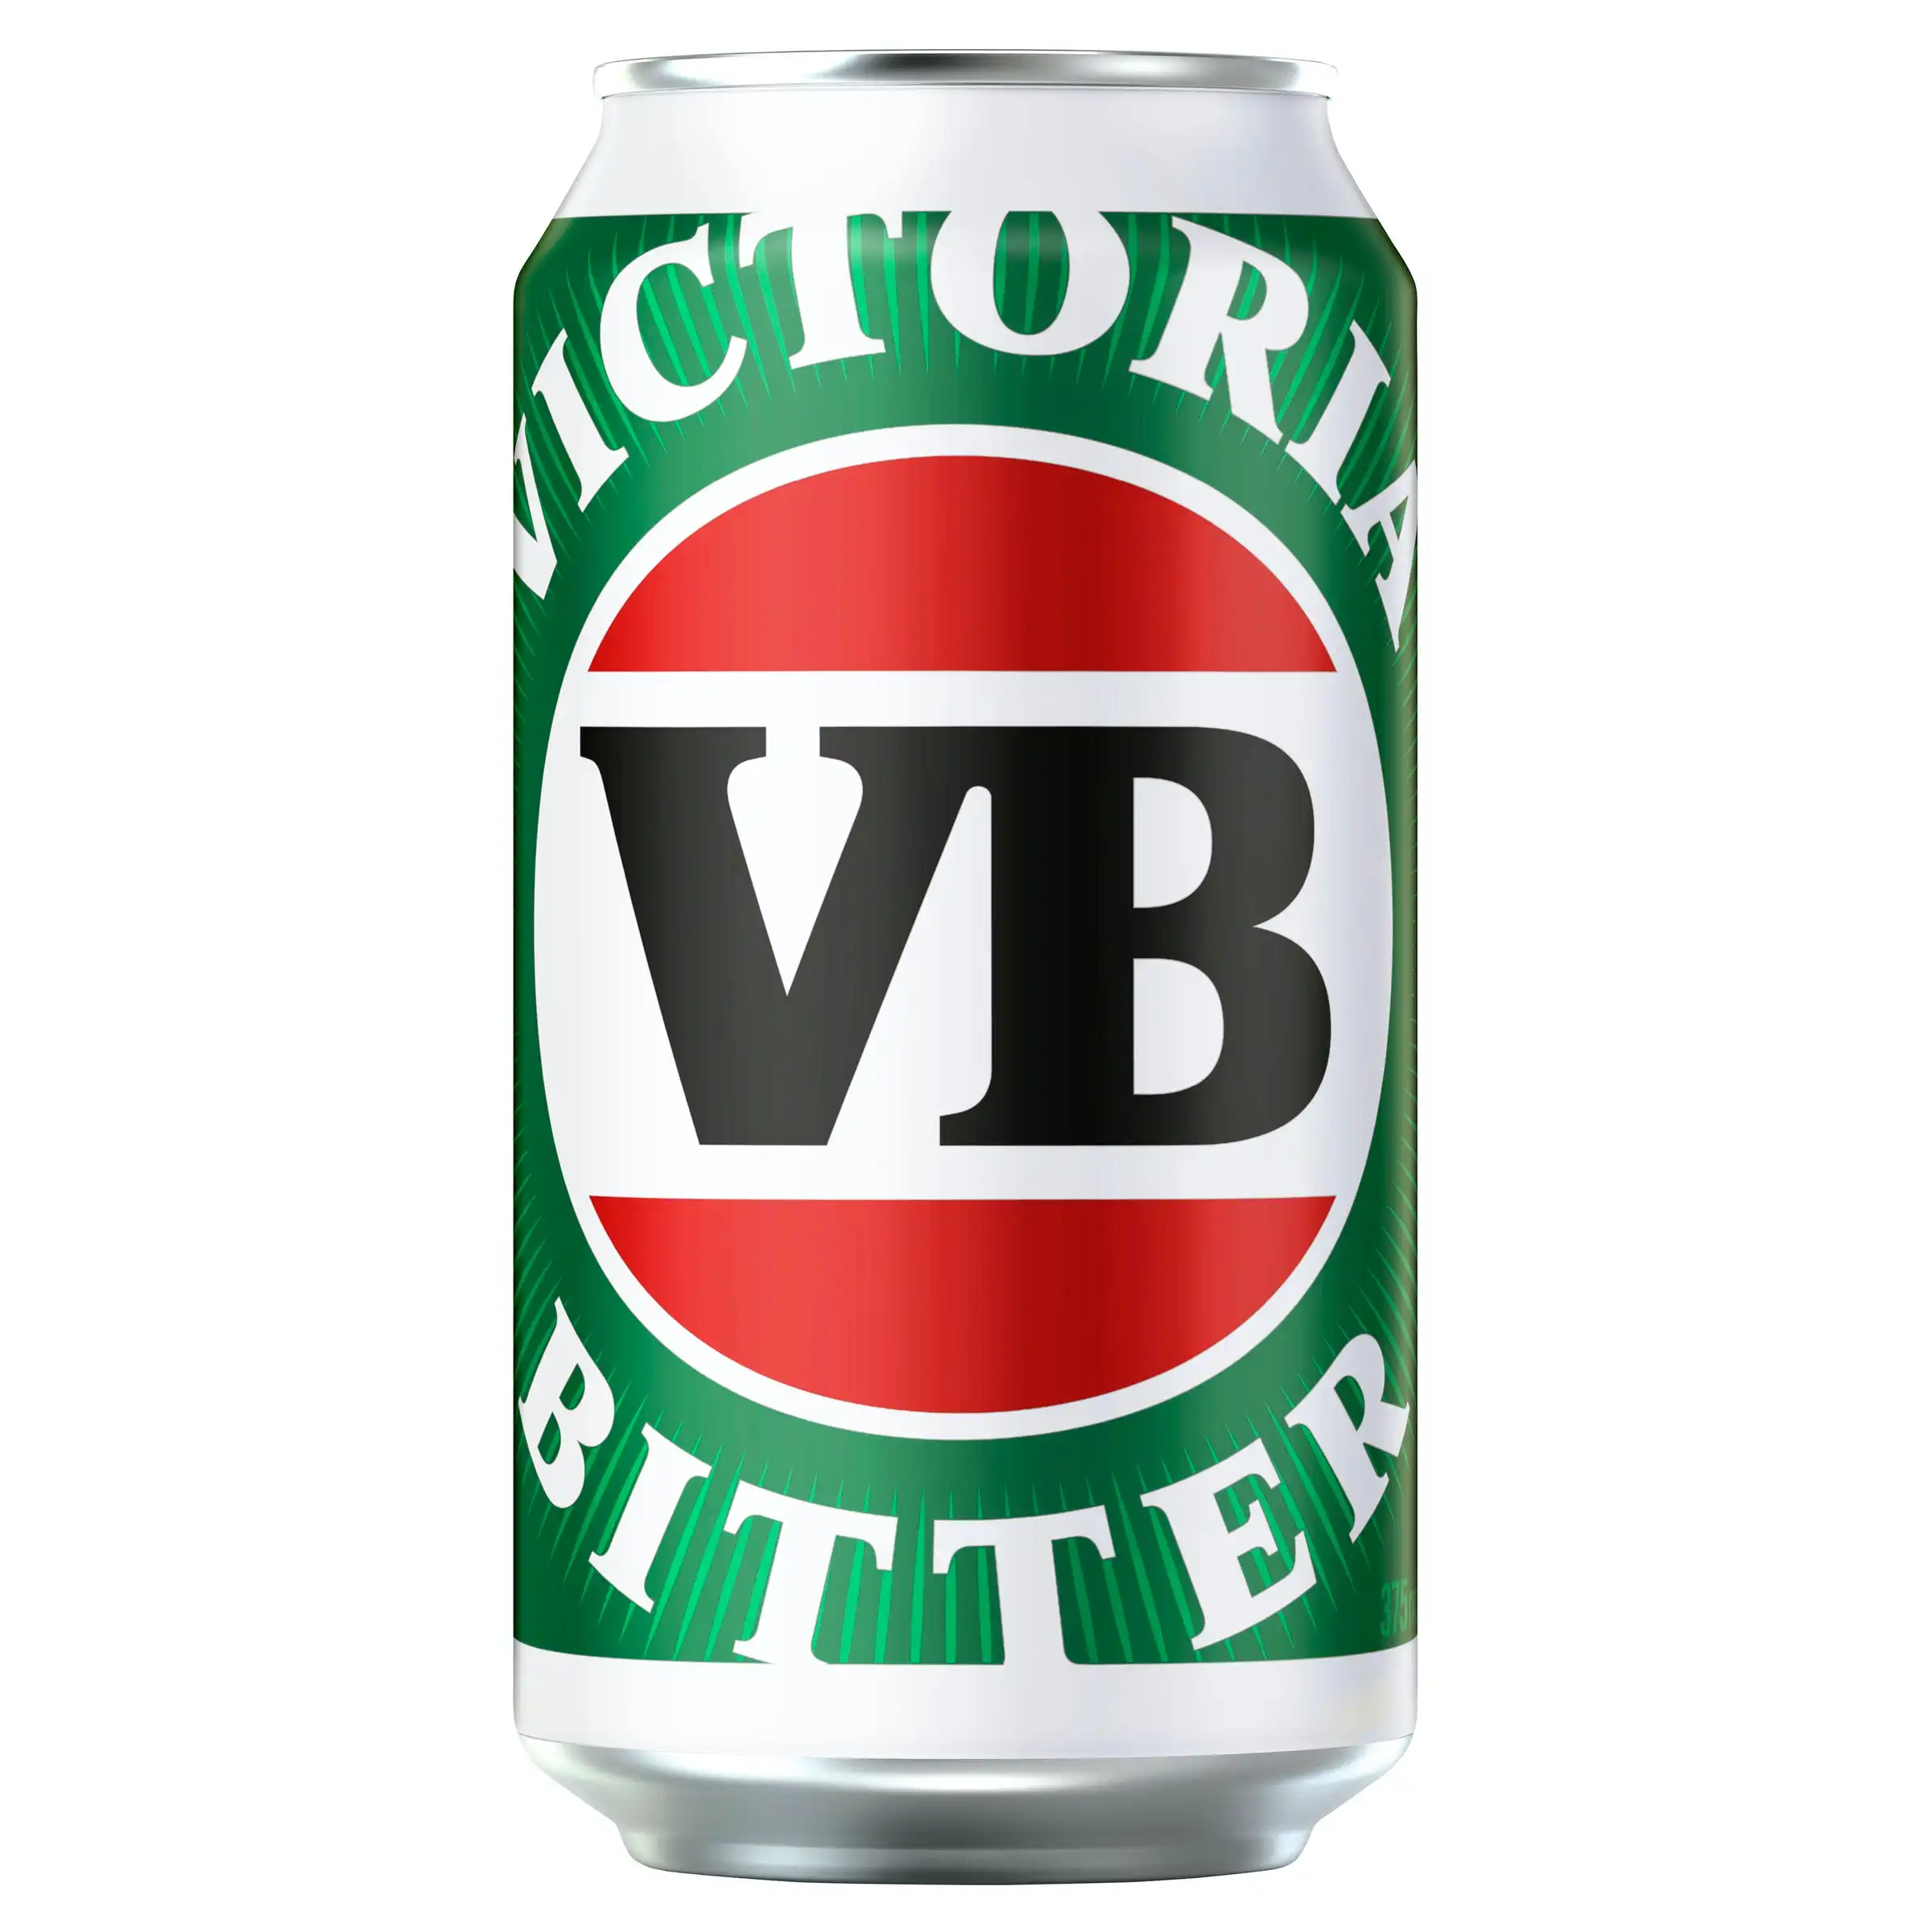 Victoria Bitter Beer Case 30 x 375mL Cans